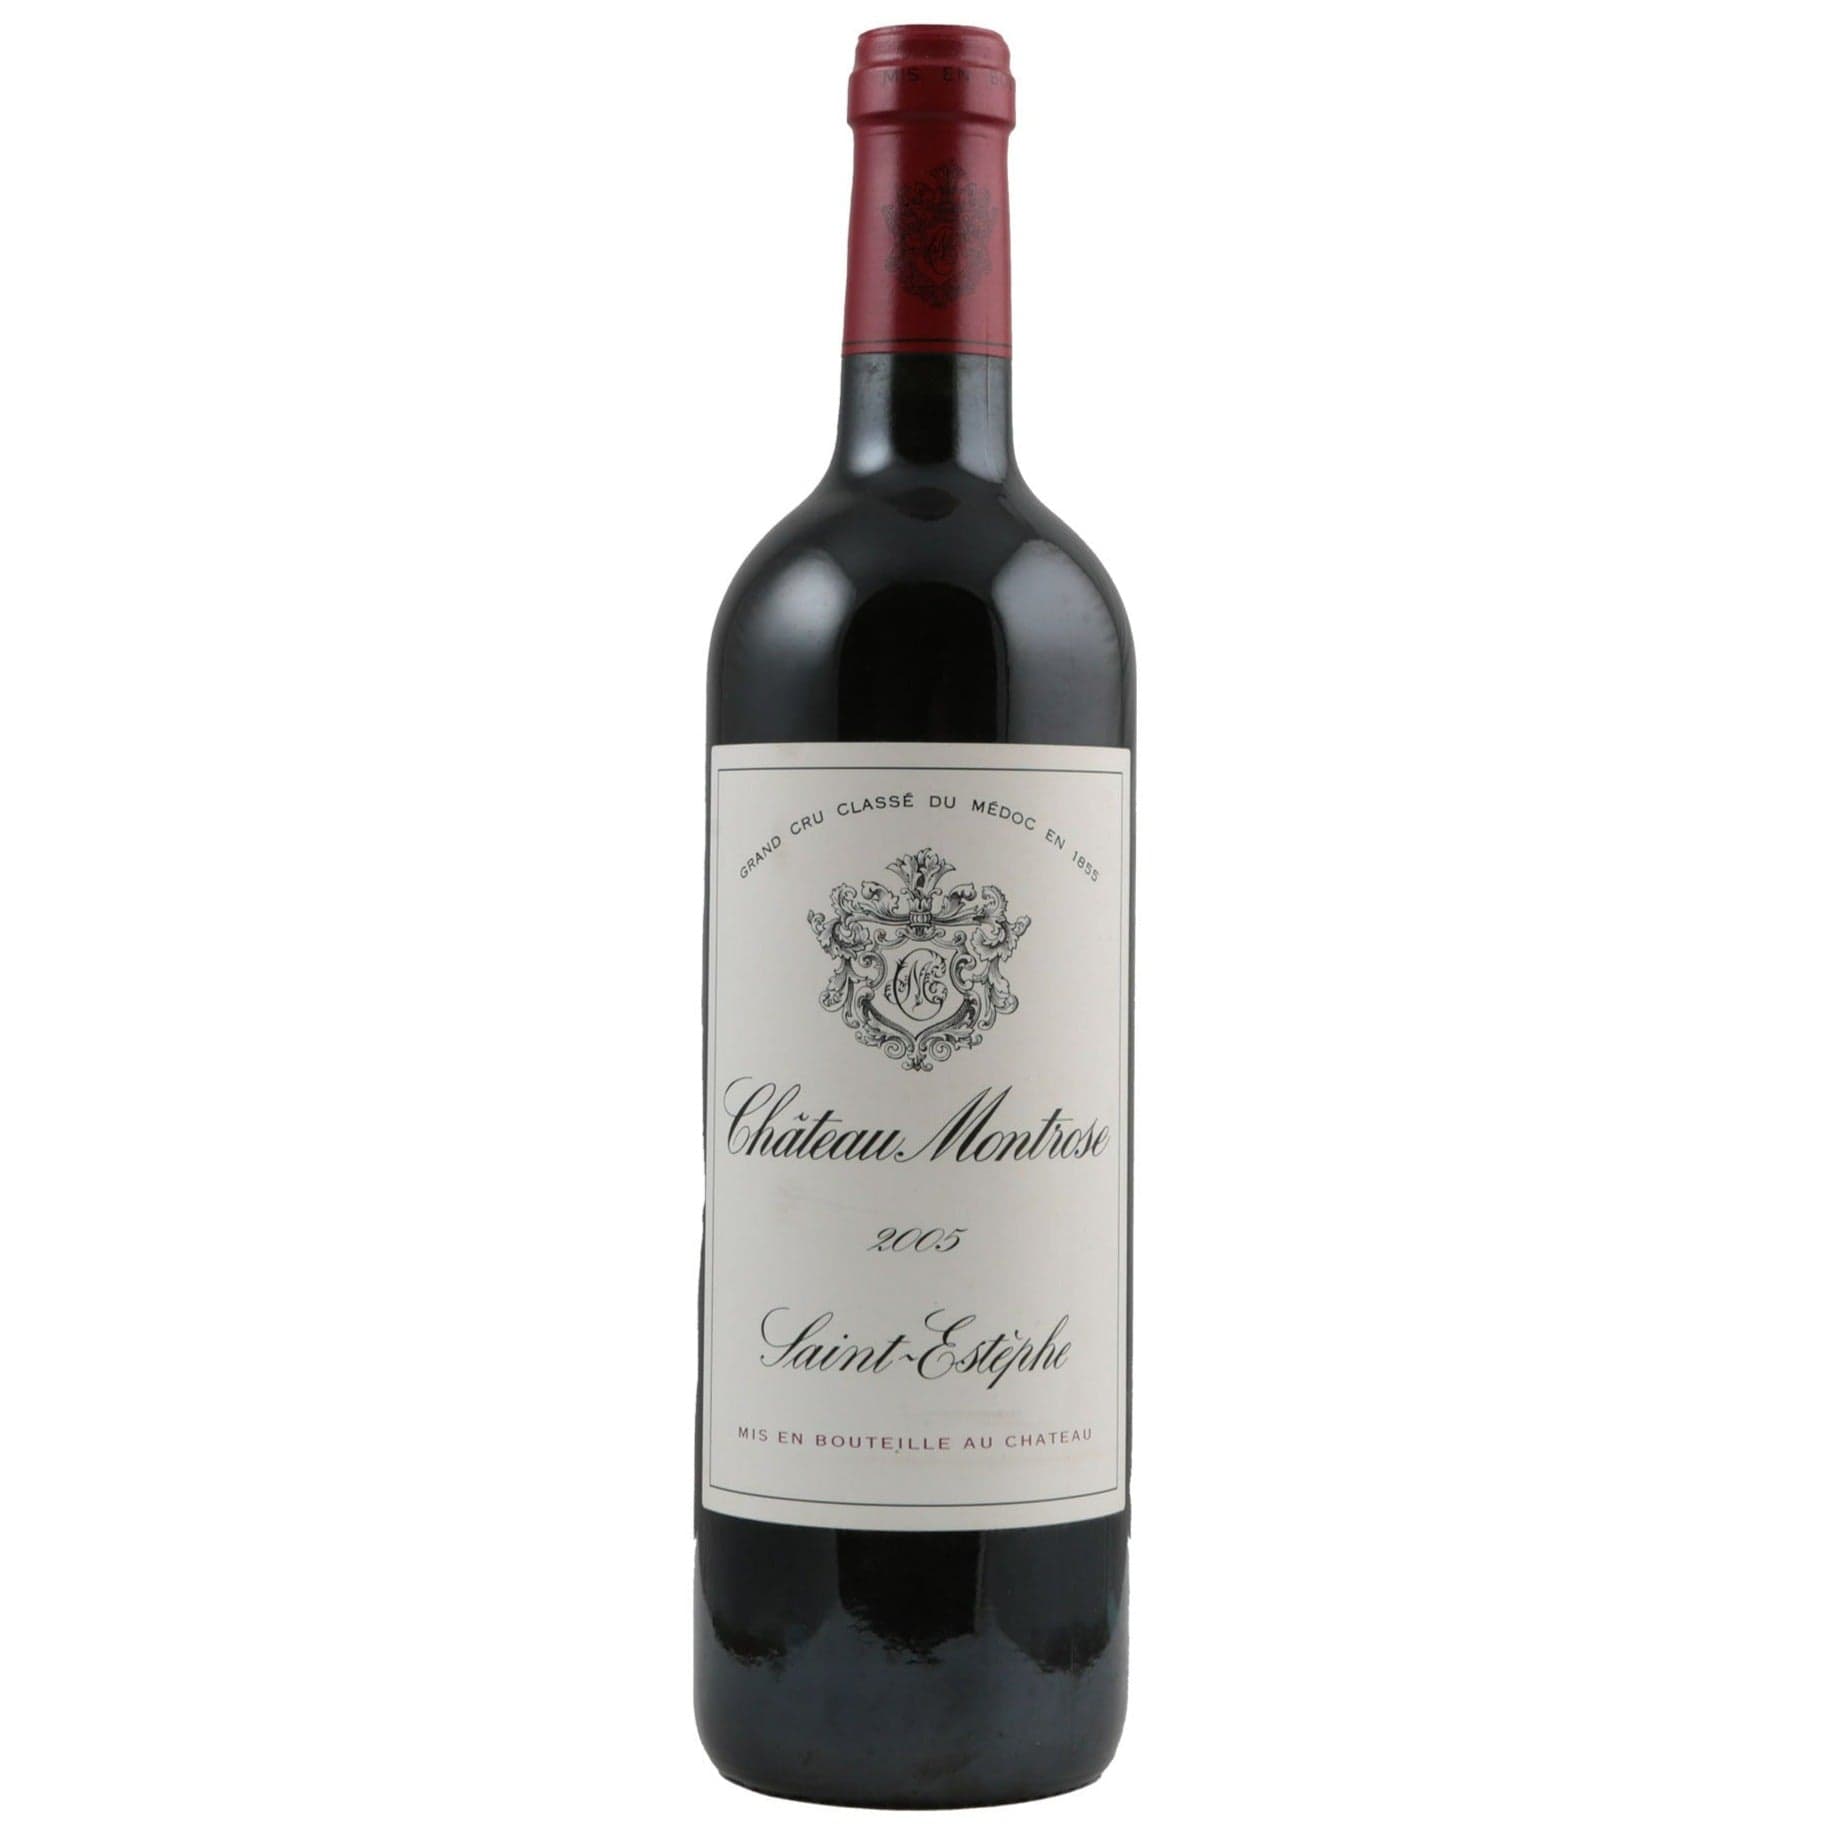 Single bottle of Red wine Ch. Montrose, Grand Cru Classe, Saint Estephe, 2005 65% Cabernet Sauvignon, 31% Merlot, 3% Cabernet Franc & 1% Petit Verdot